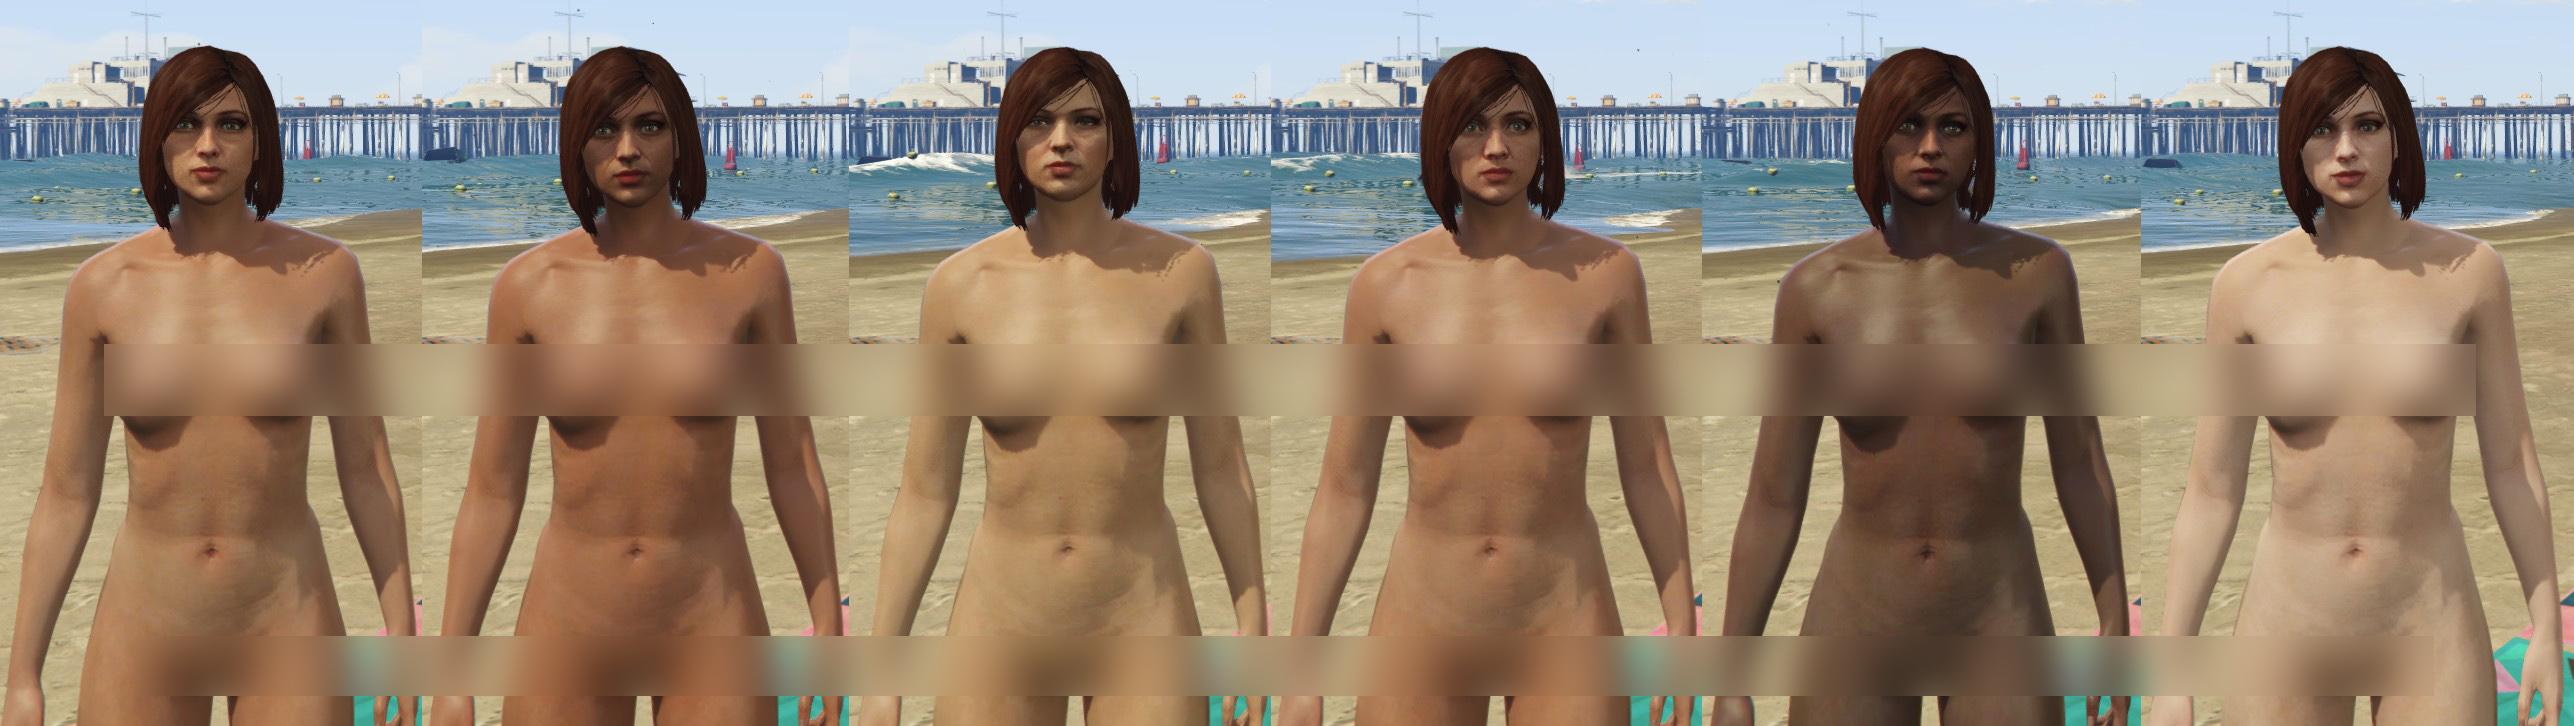 гта 5 голая девушка на пляже фото 27